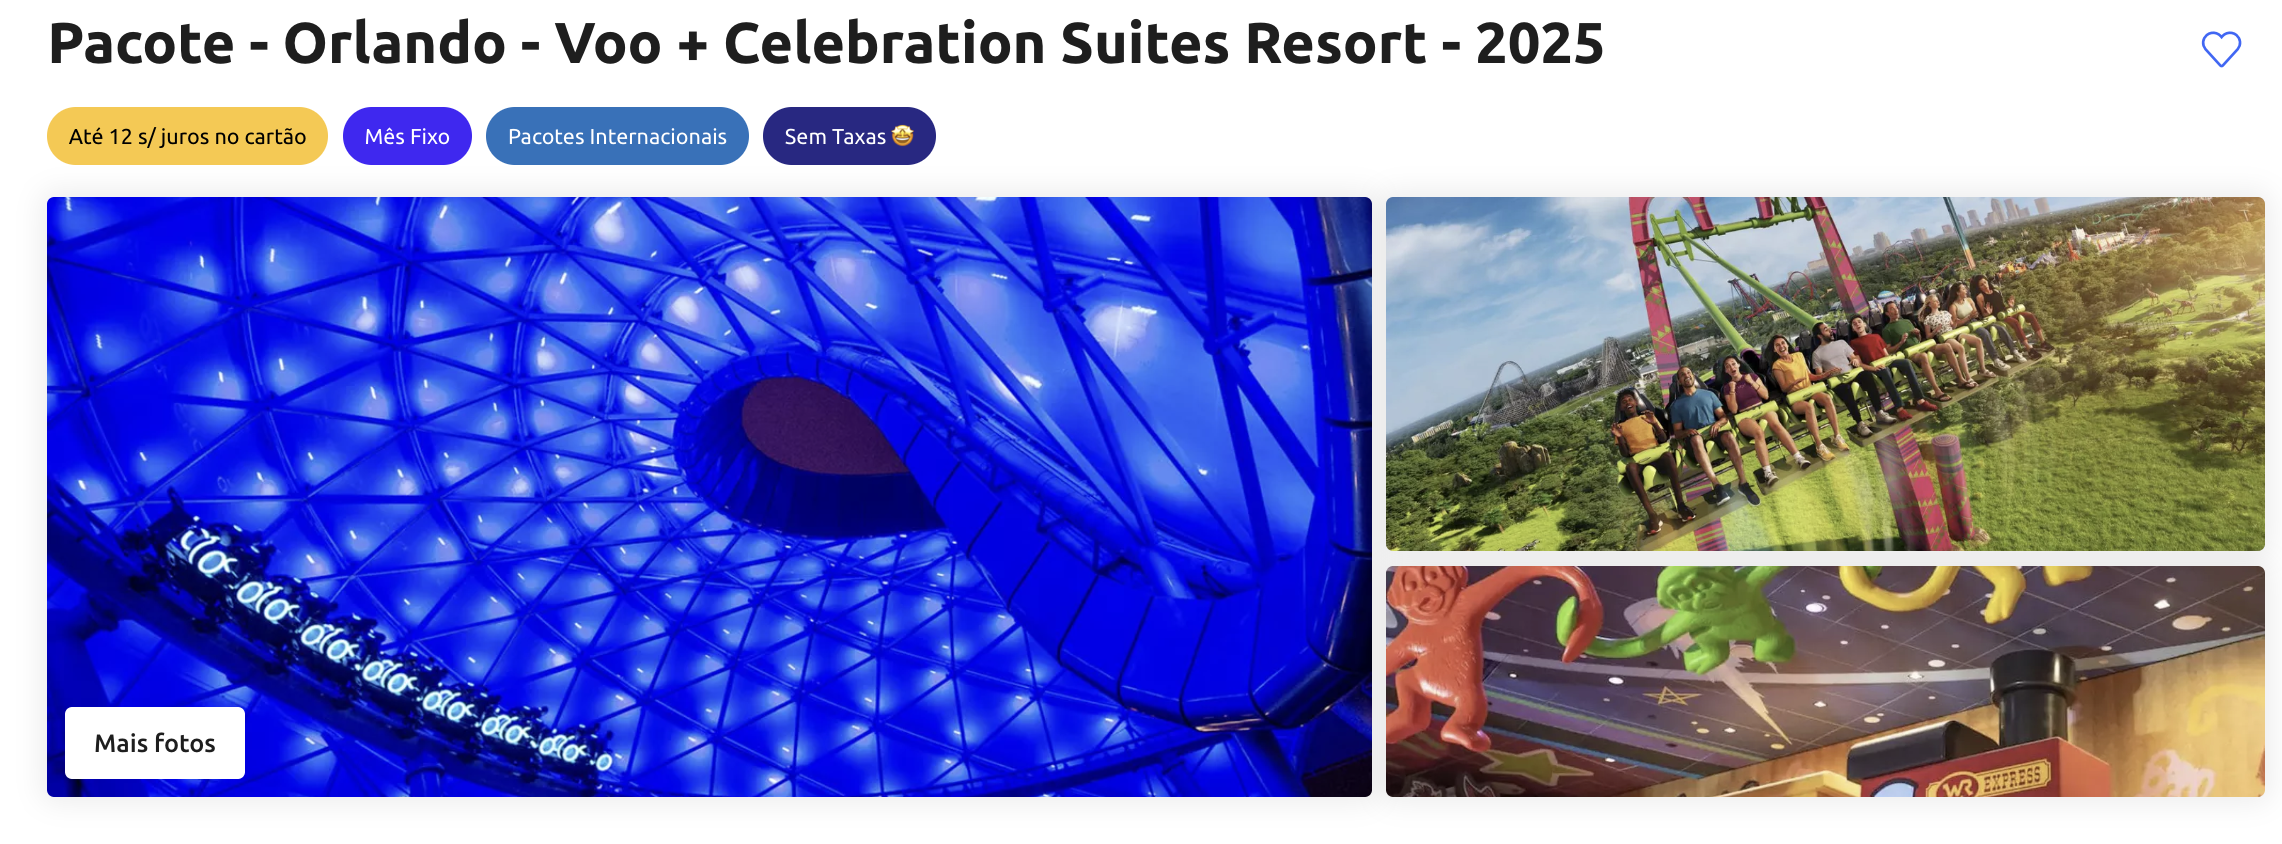 Pacote - Orlando - Voo + Celebration Suites Resort - 2025 